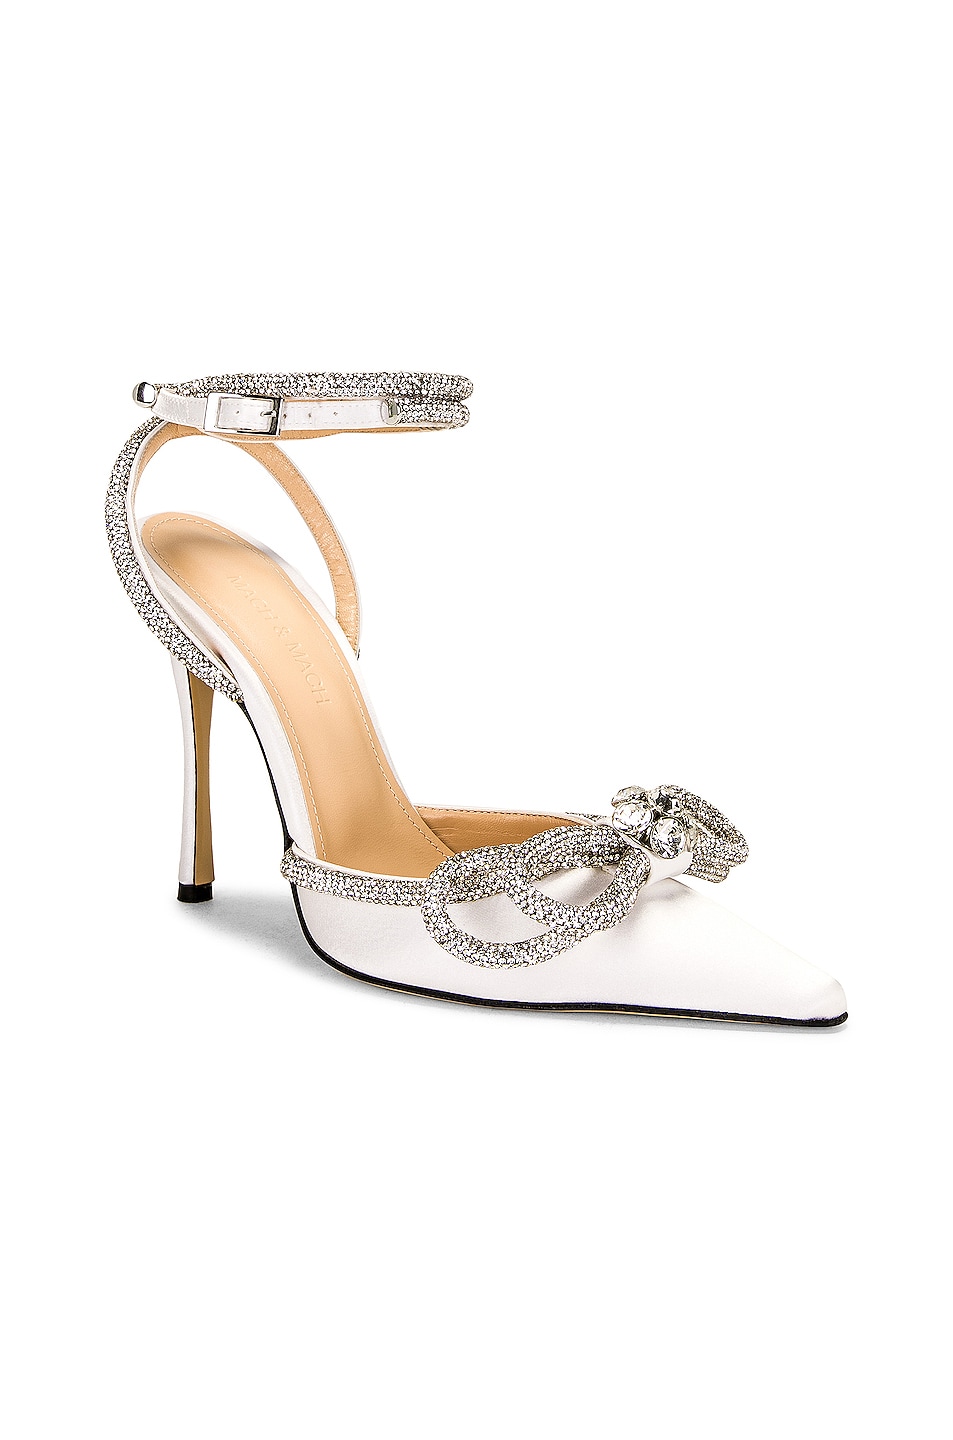 MACH & MACH Double Crystal Bow High Heel in White | FWRD